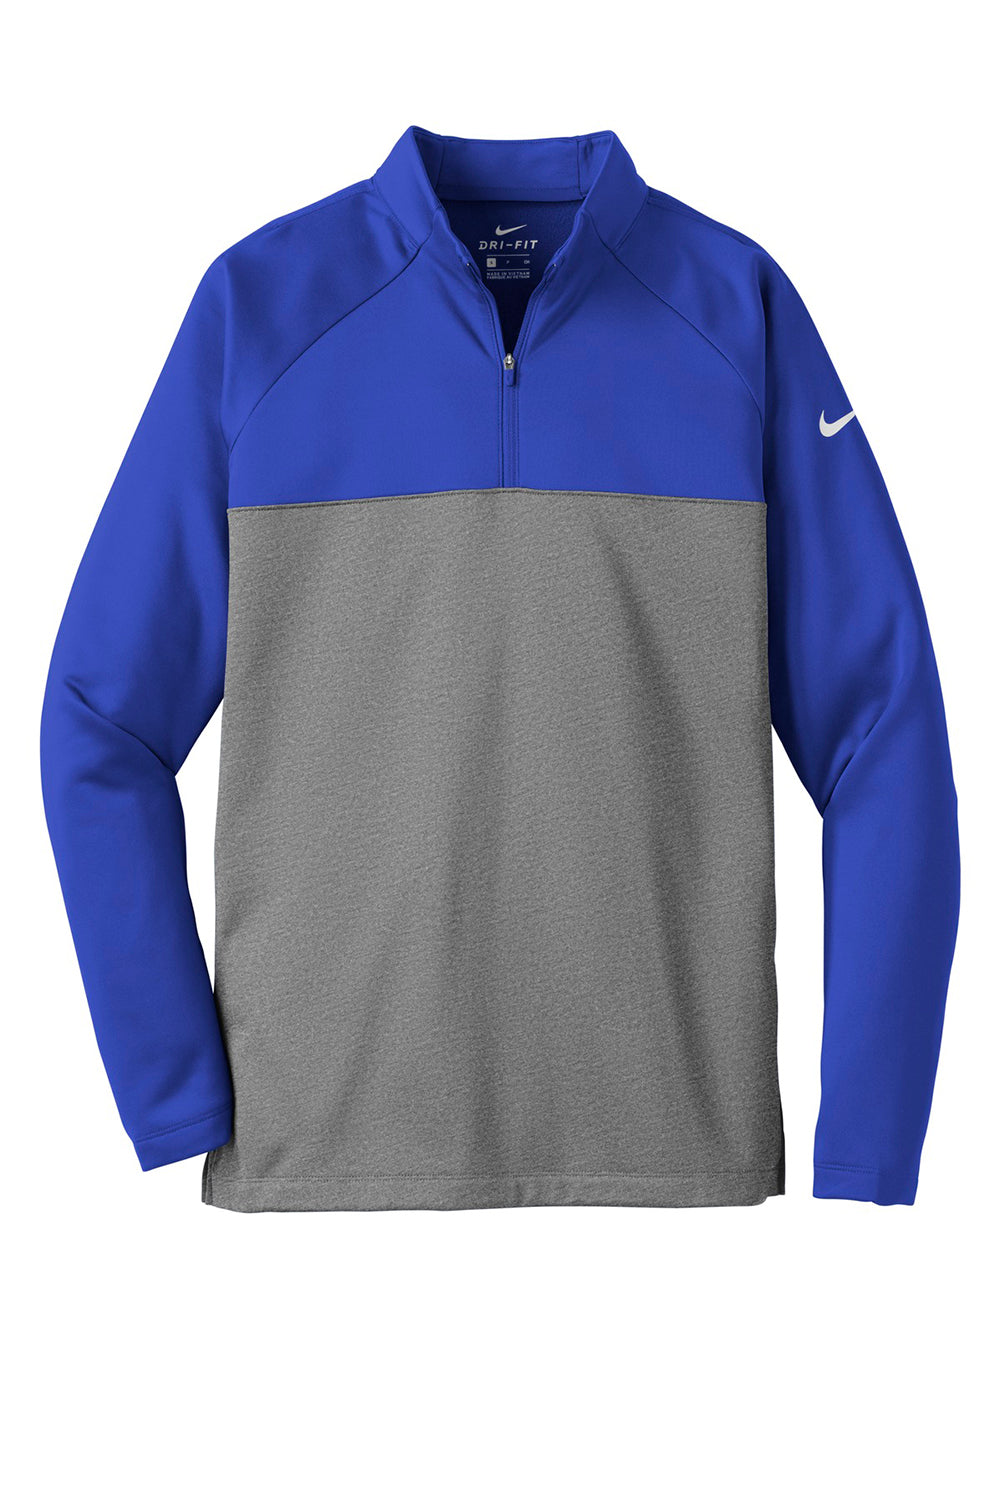 Nike NKAH6254 Mens Therma-Fit Moisture Wicking Fleece 1/4 Zip Sweatshirt Game Royal Blue/Heather Grey Flat Front